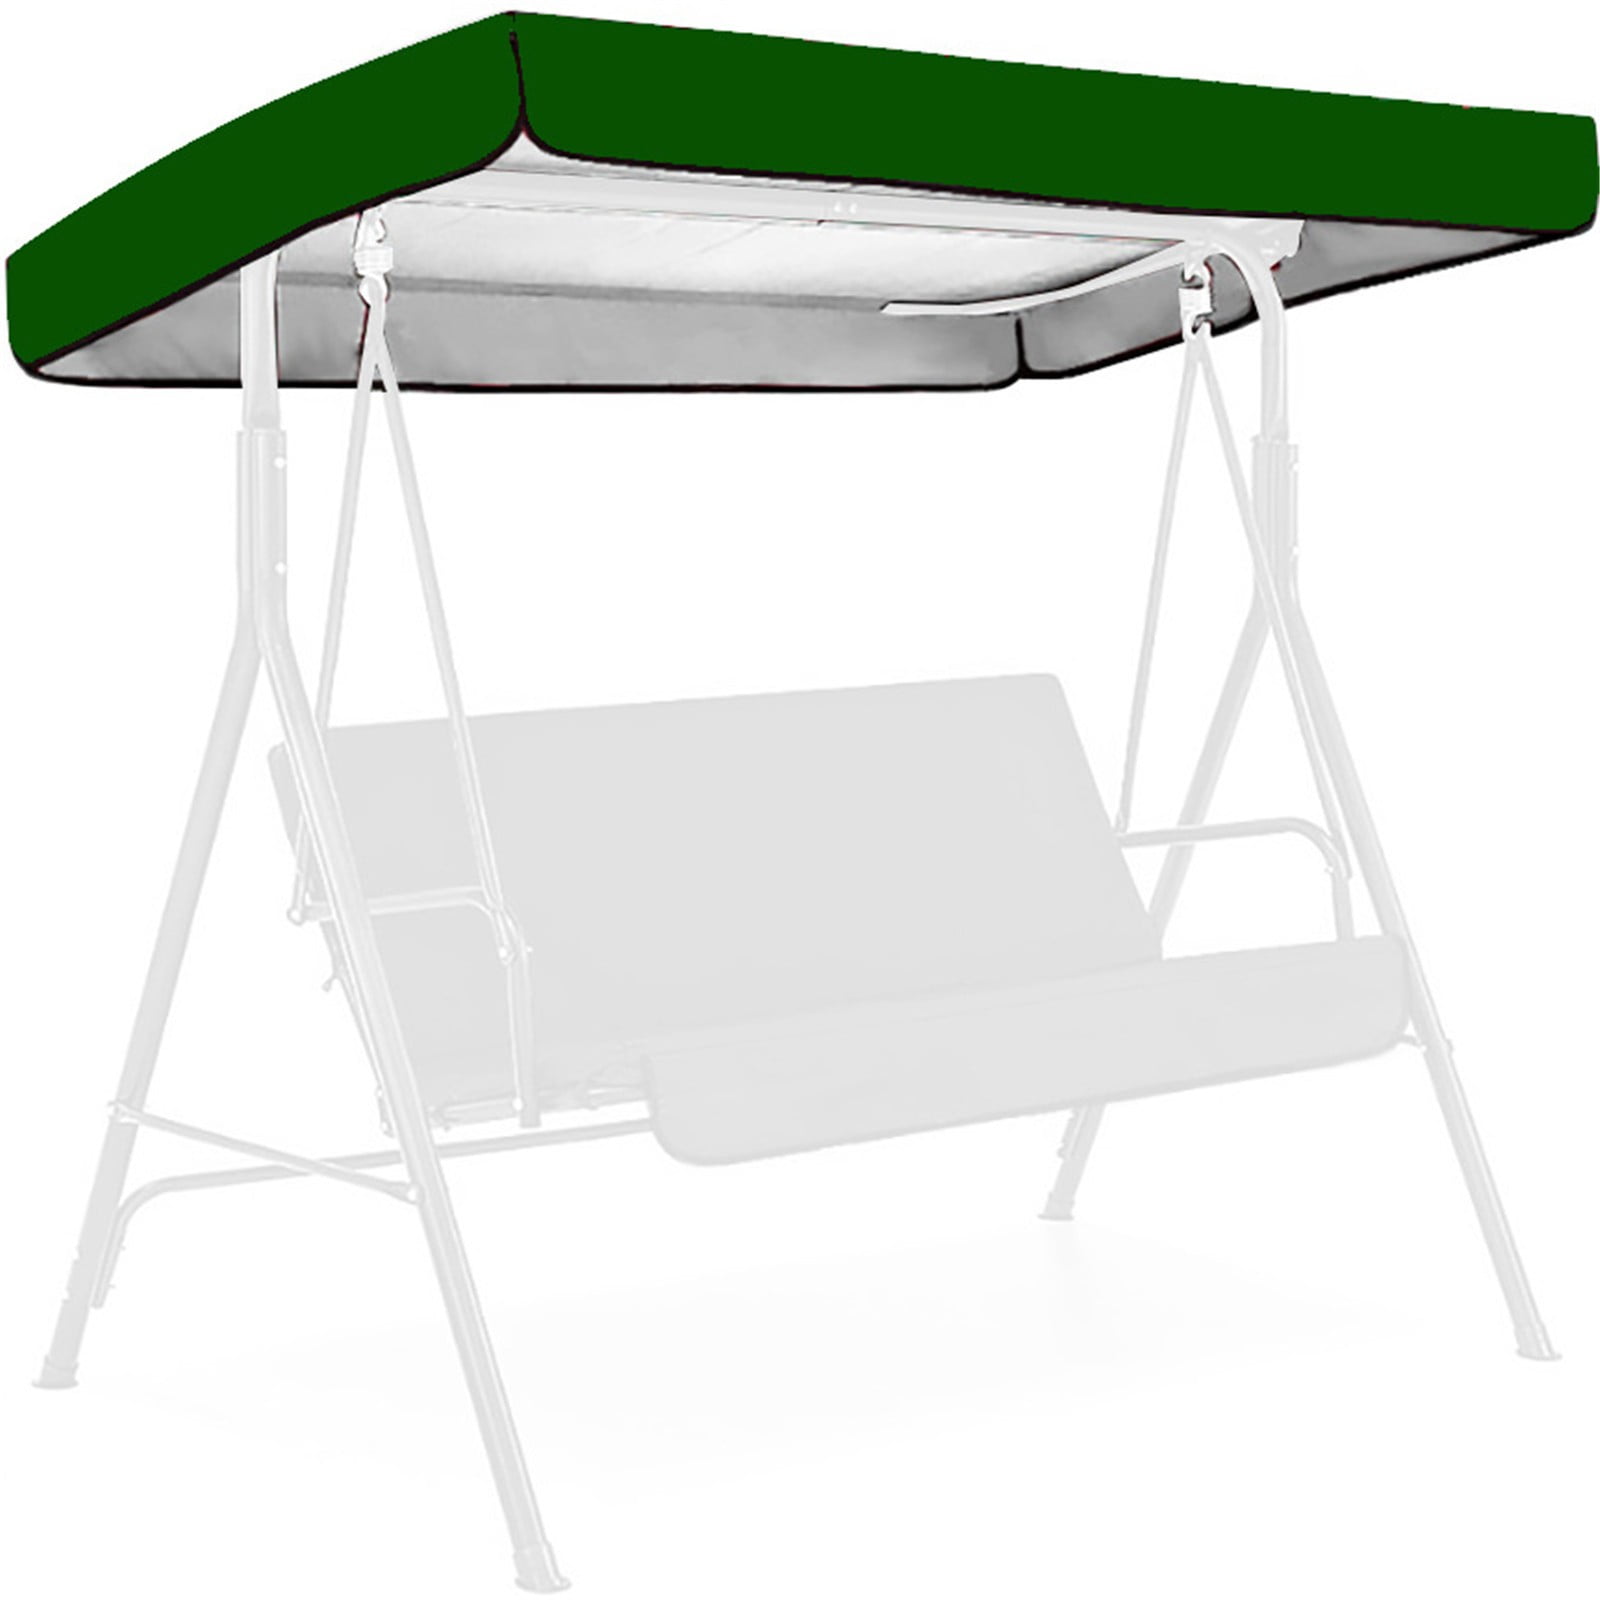 Patio Swing Canopy Seat Top Cover Waterproof Replacement Sunshade Garde Outdoor 